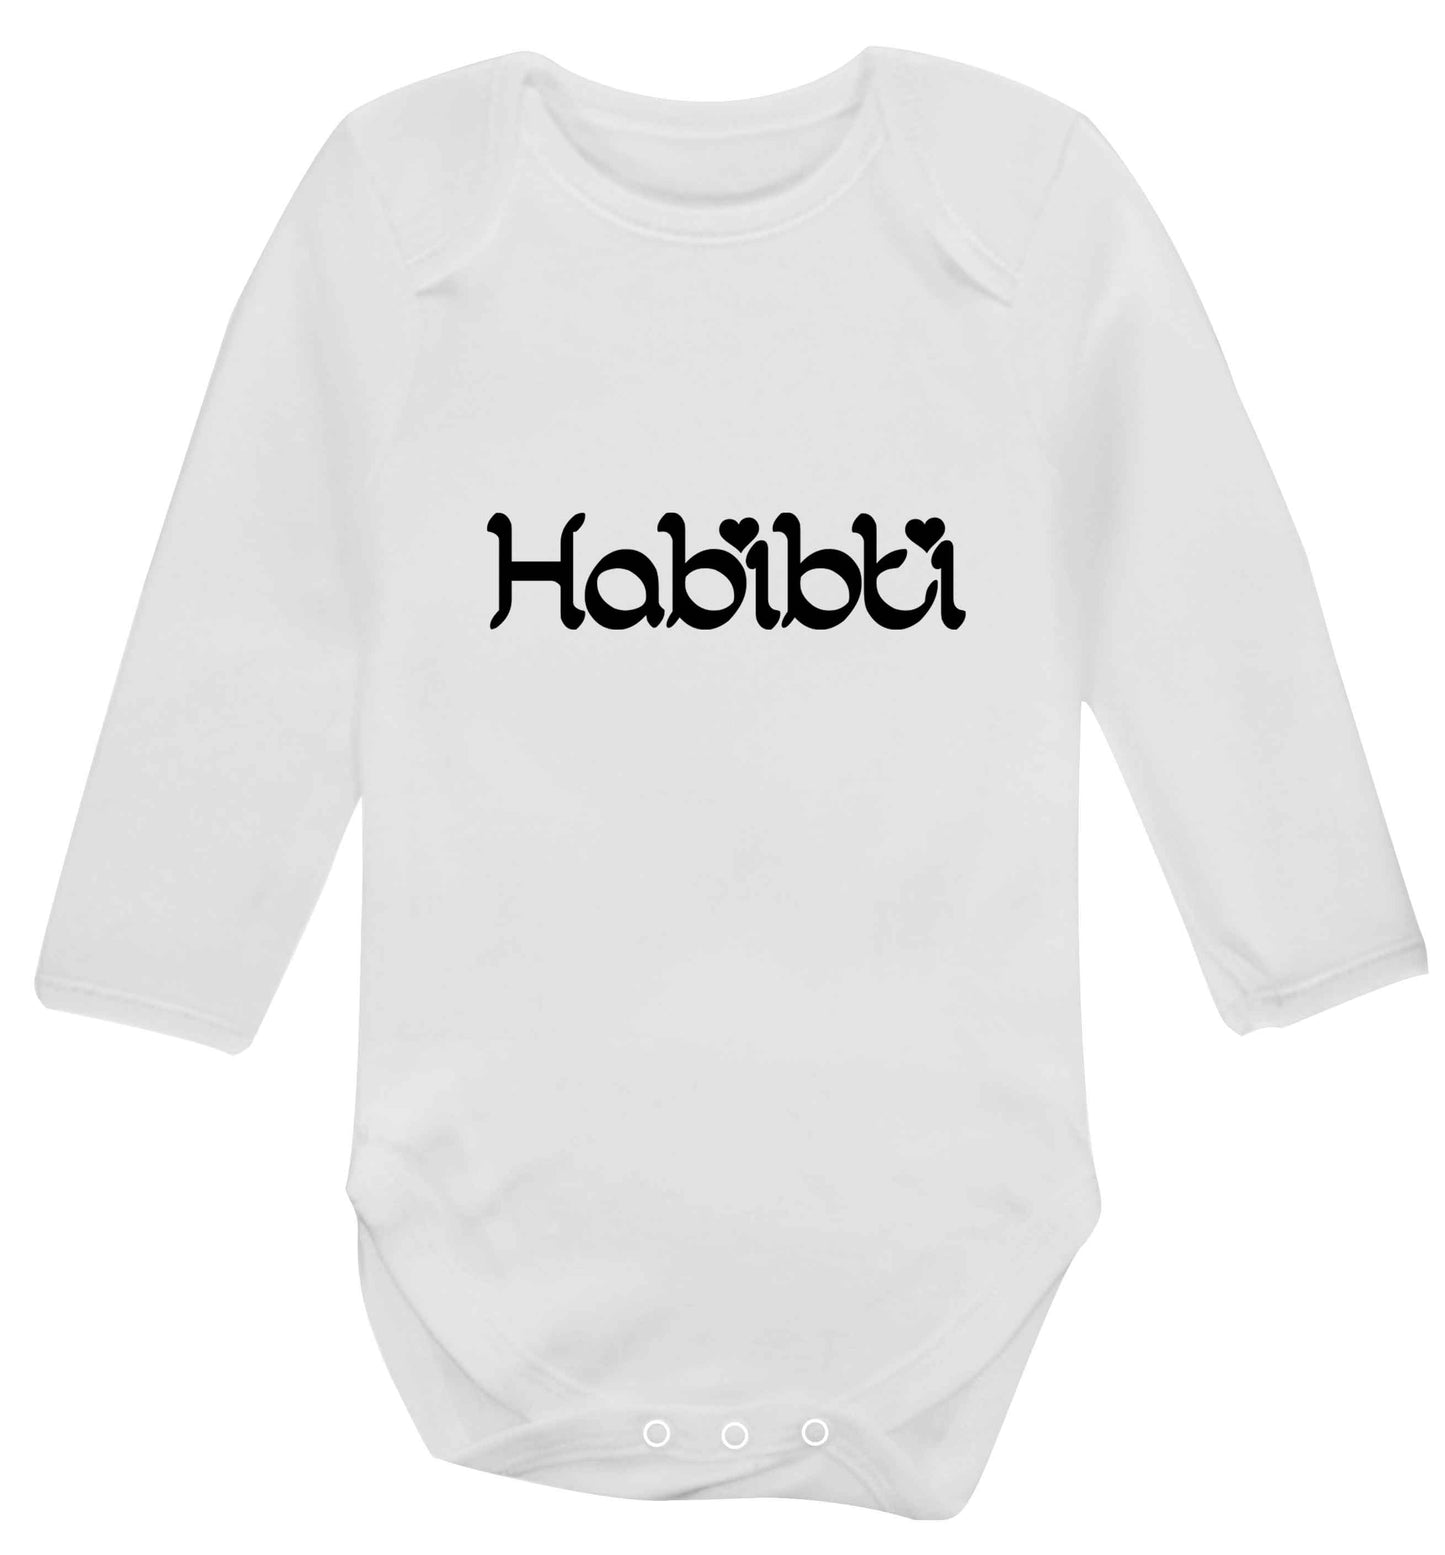 Habibiti baby vest long sleeved white 6-12 months